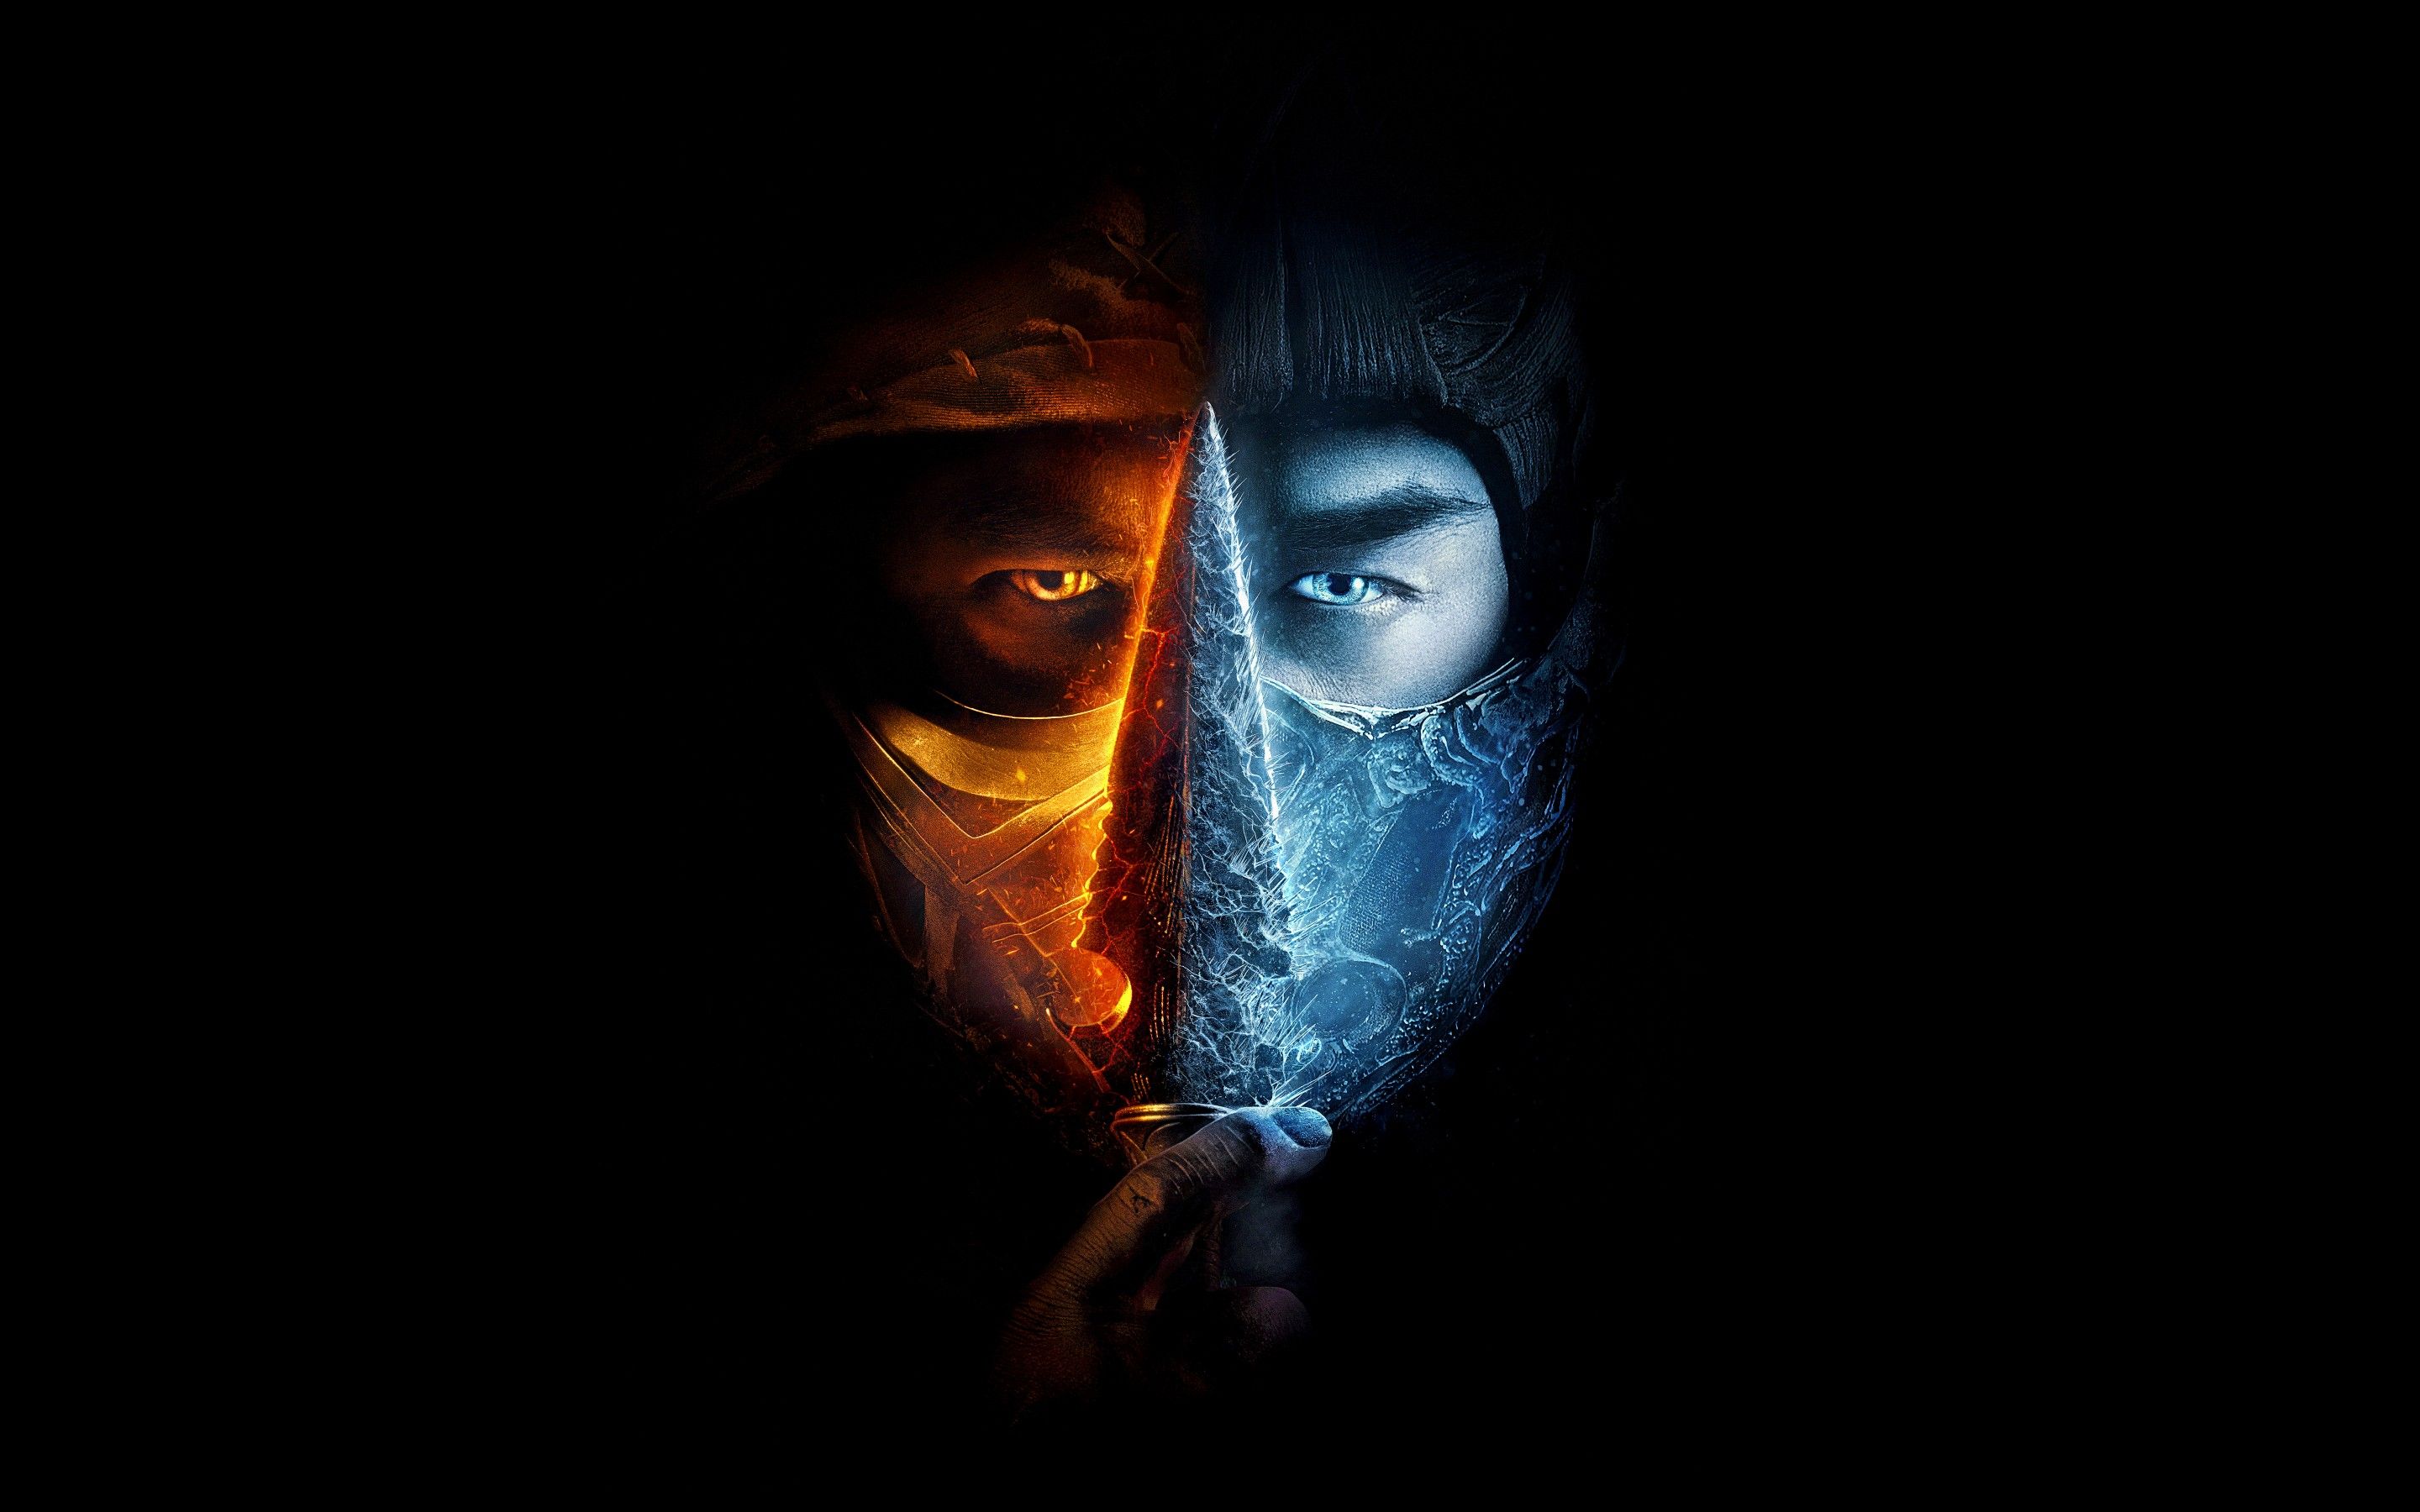 Mortal Kombat 4K Wallpaper, 2021 Movies, Scorpion, Sub Zero, Black Background, 5K, 8K, Black Dark